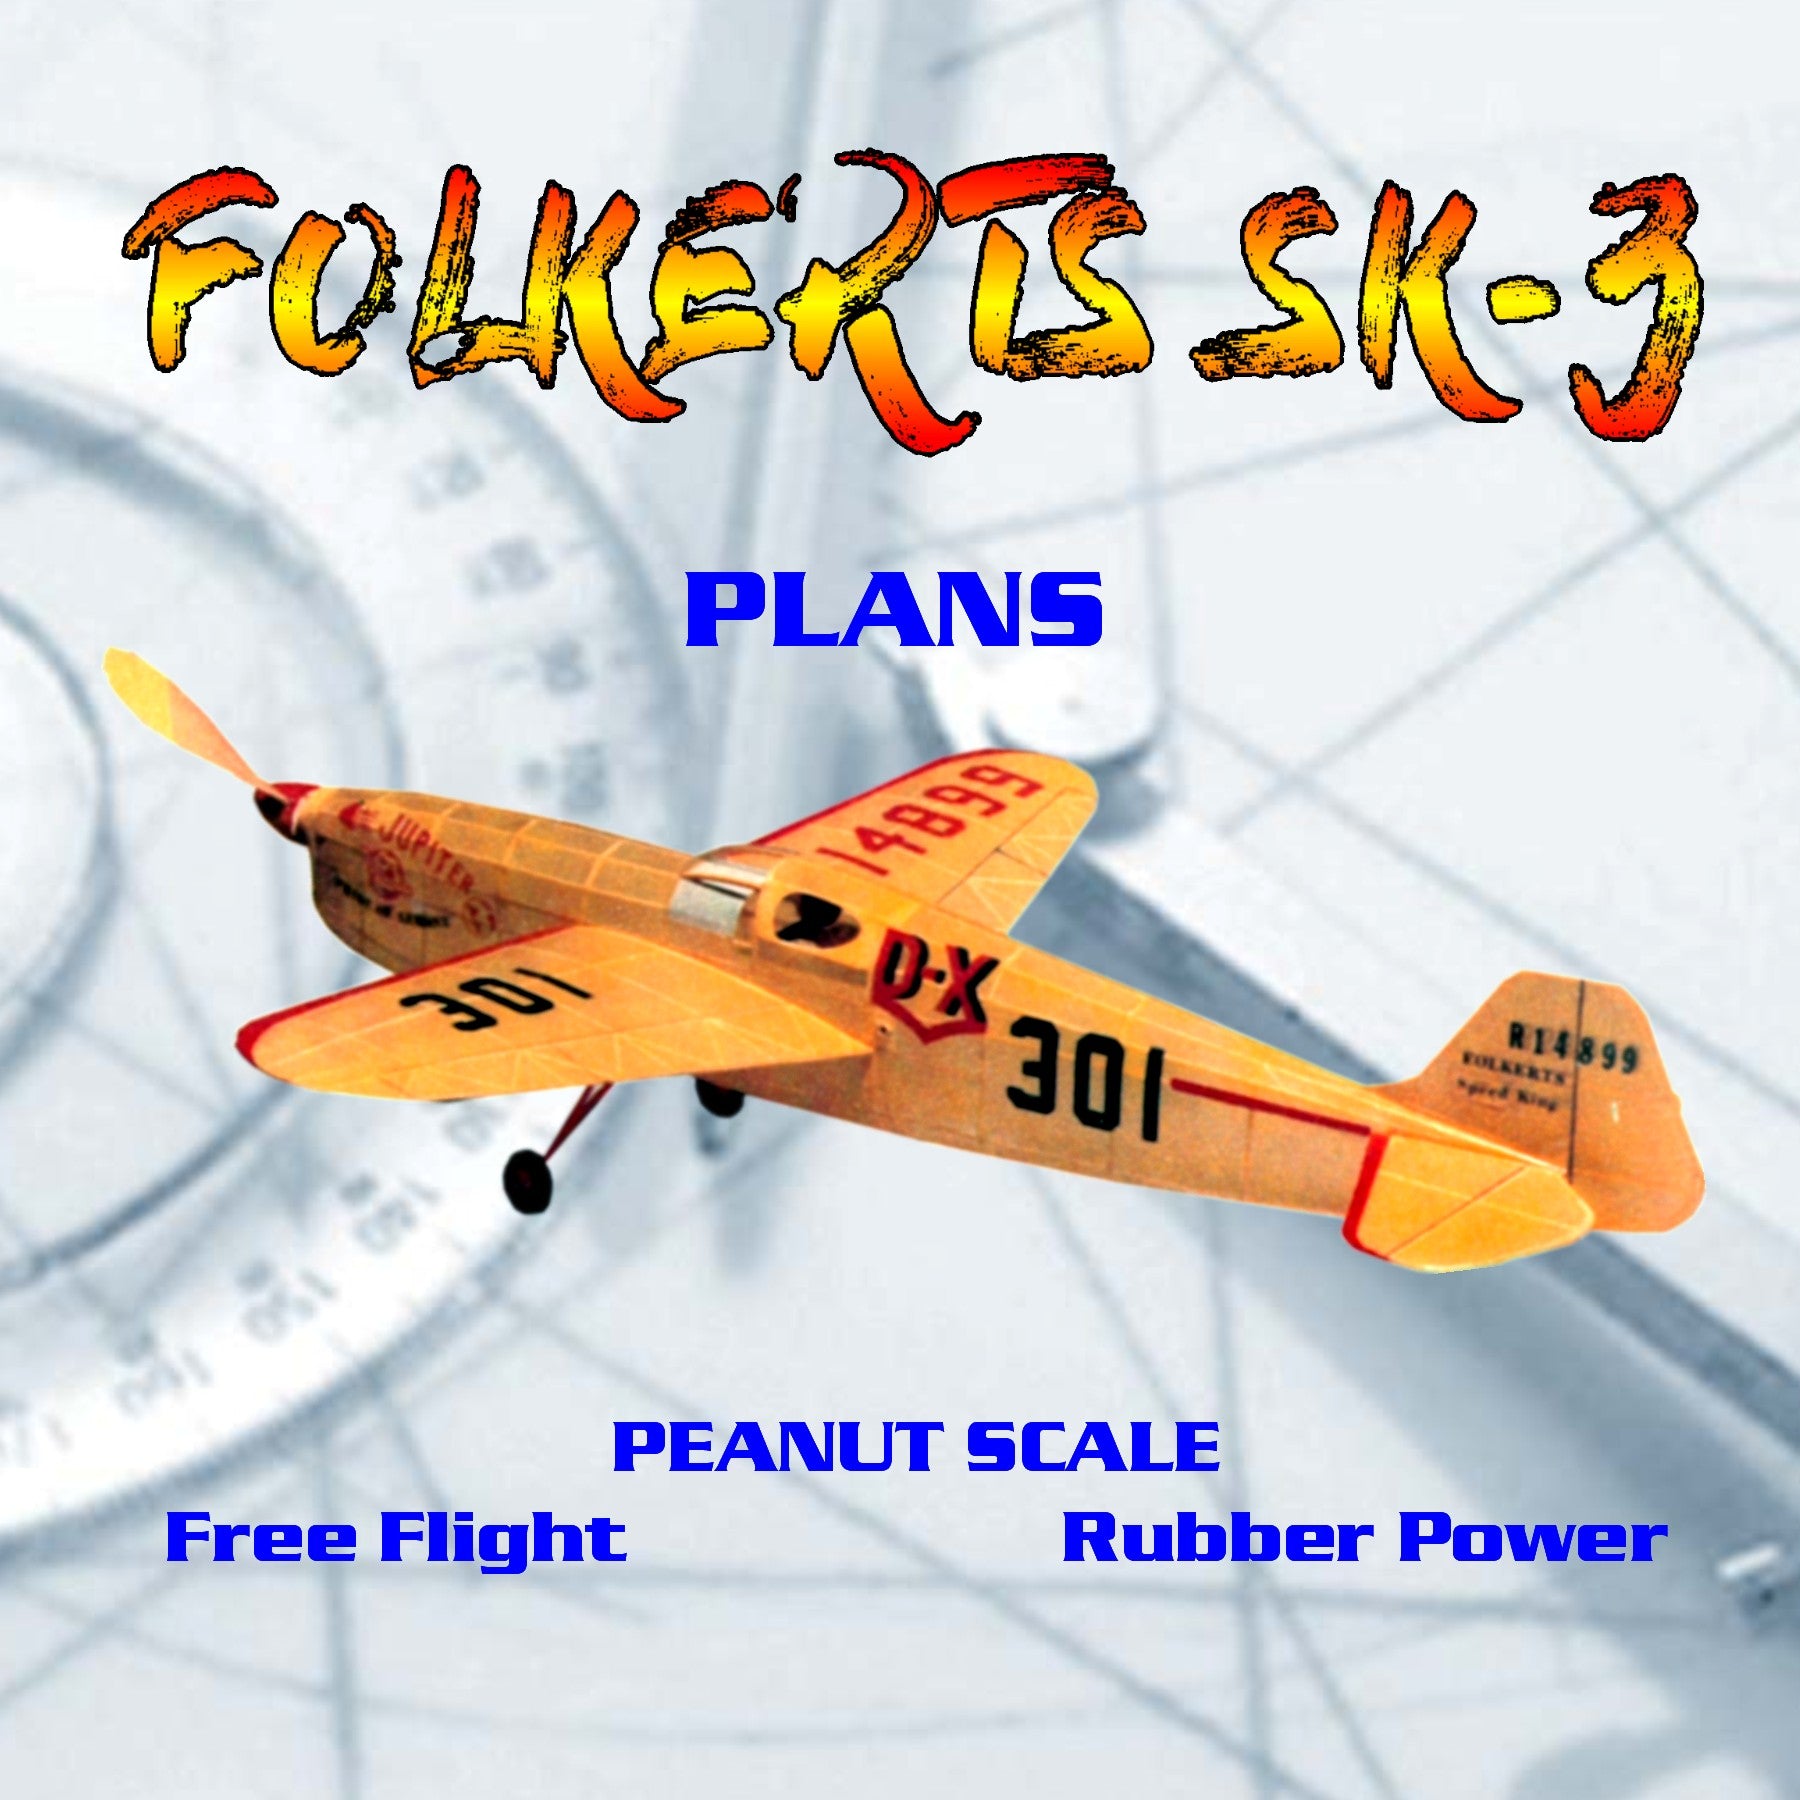 full size printed peanut scale plans folkerts sk-3  best peanut scale models ever design